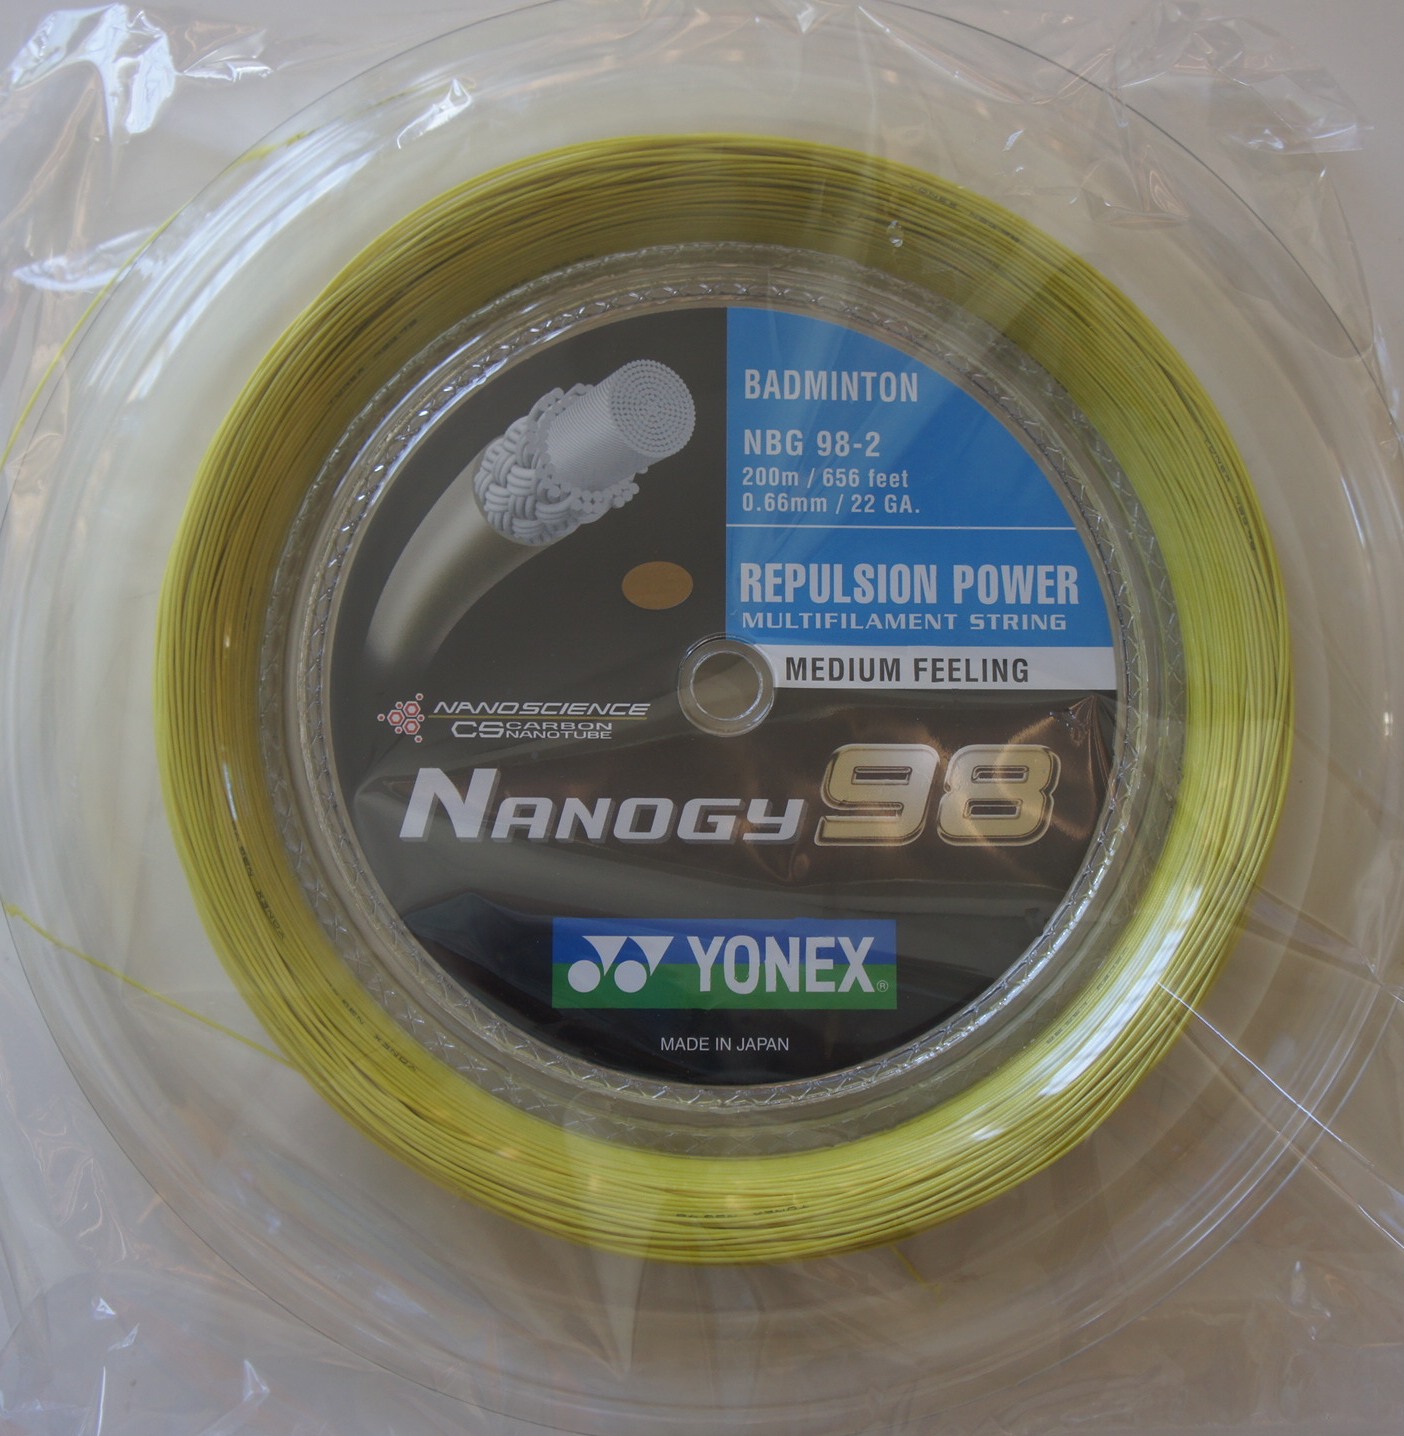 YONEX Nanogy 98 NBG98 Badminton Coil String, 200 m, Yellow, Calibre Sports Australia (Sell Internationally Since 1996)